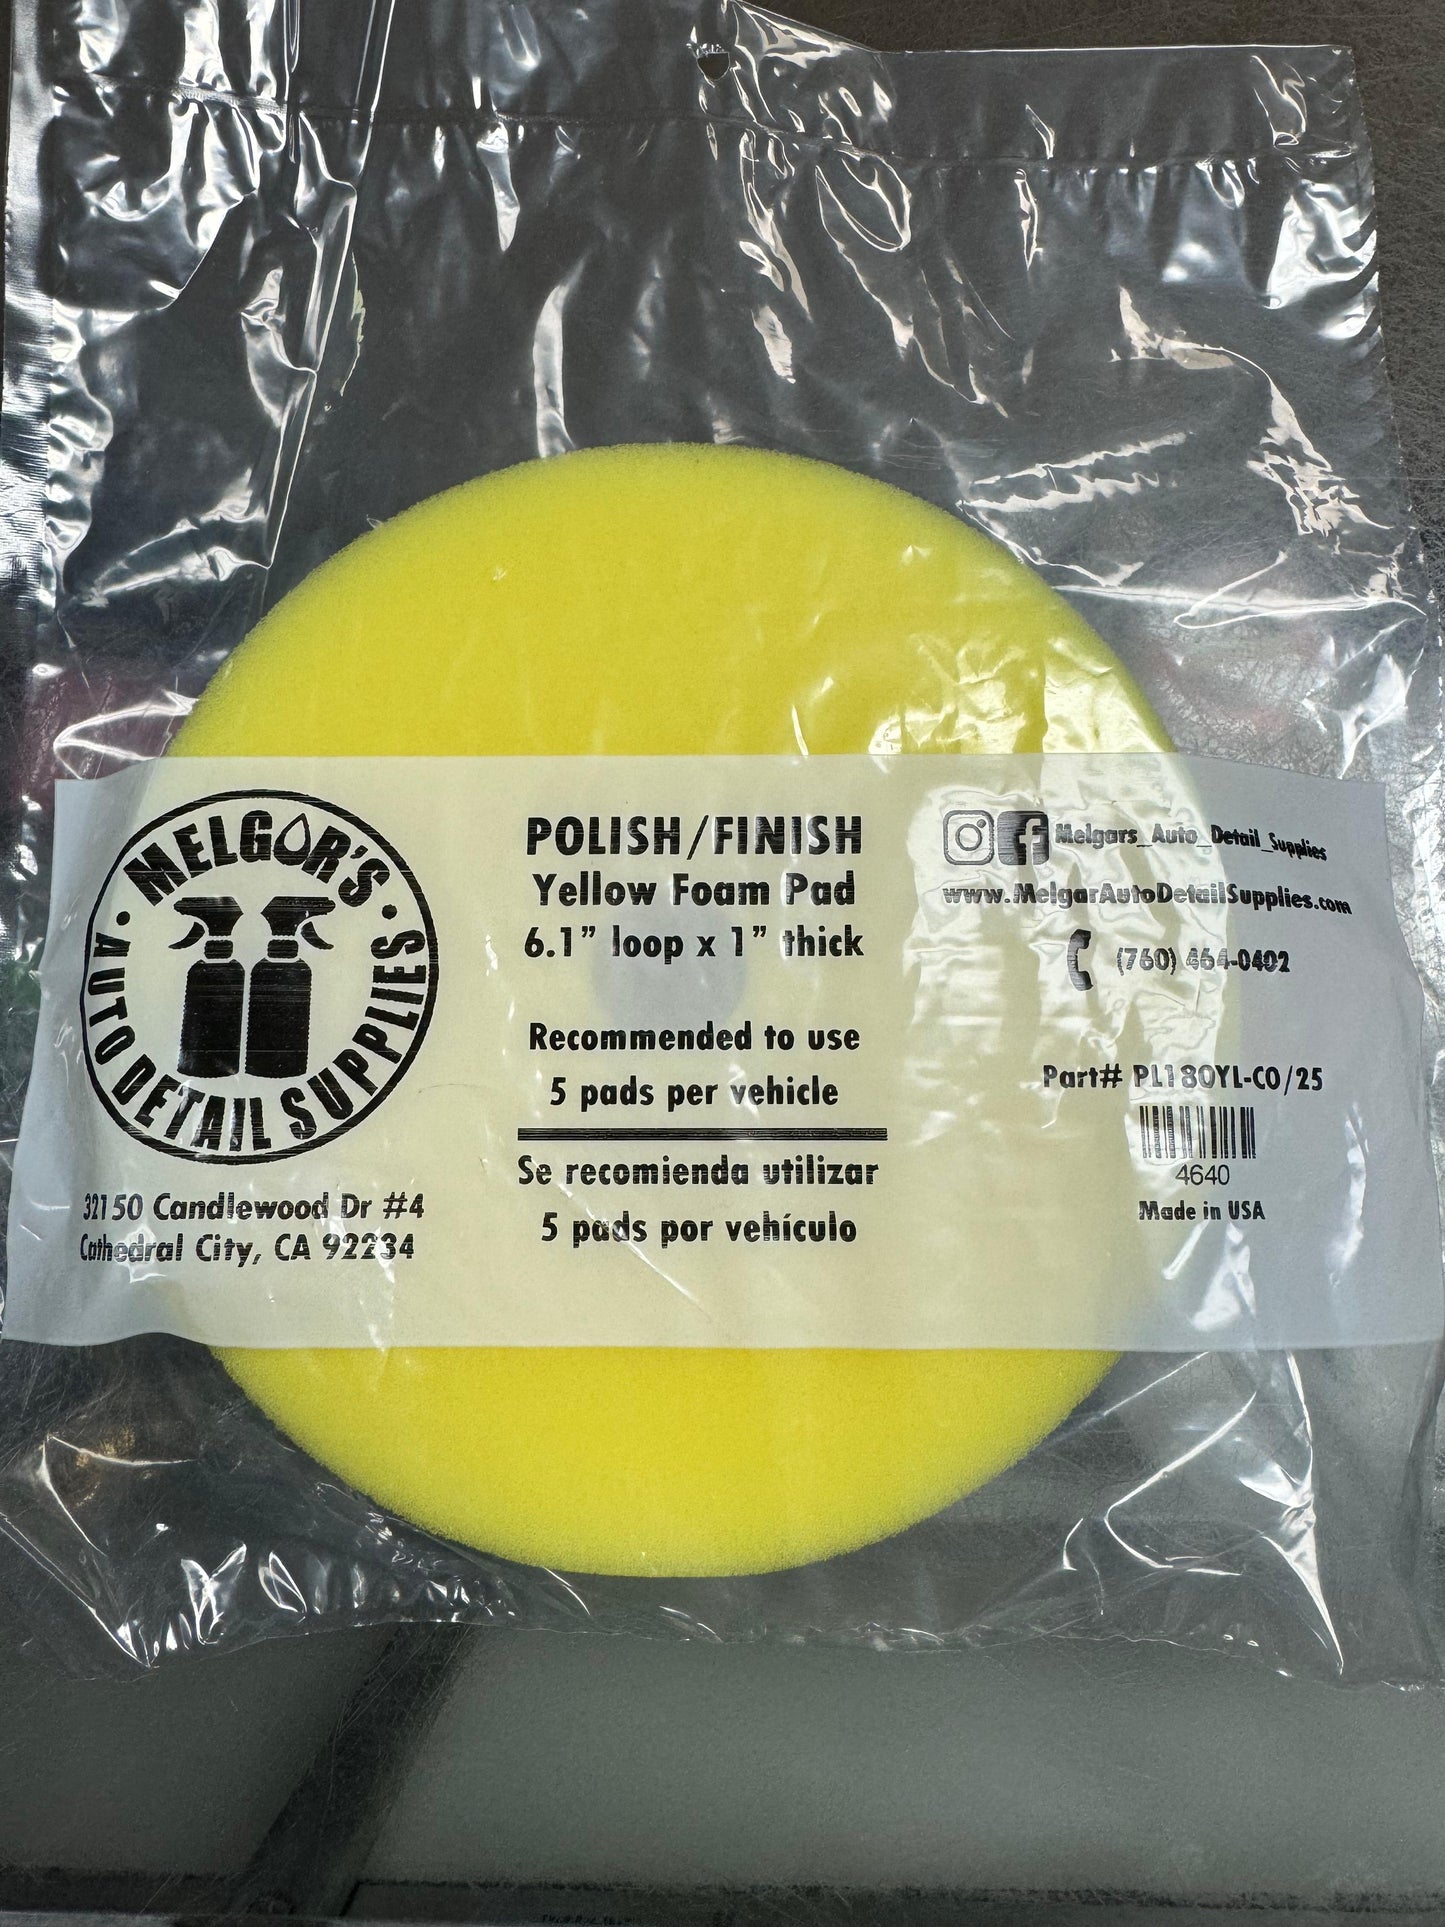 POLISH / FINISH Yellow Foam Pad 6” loop x 1” thick